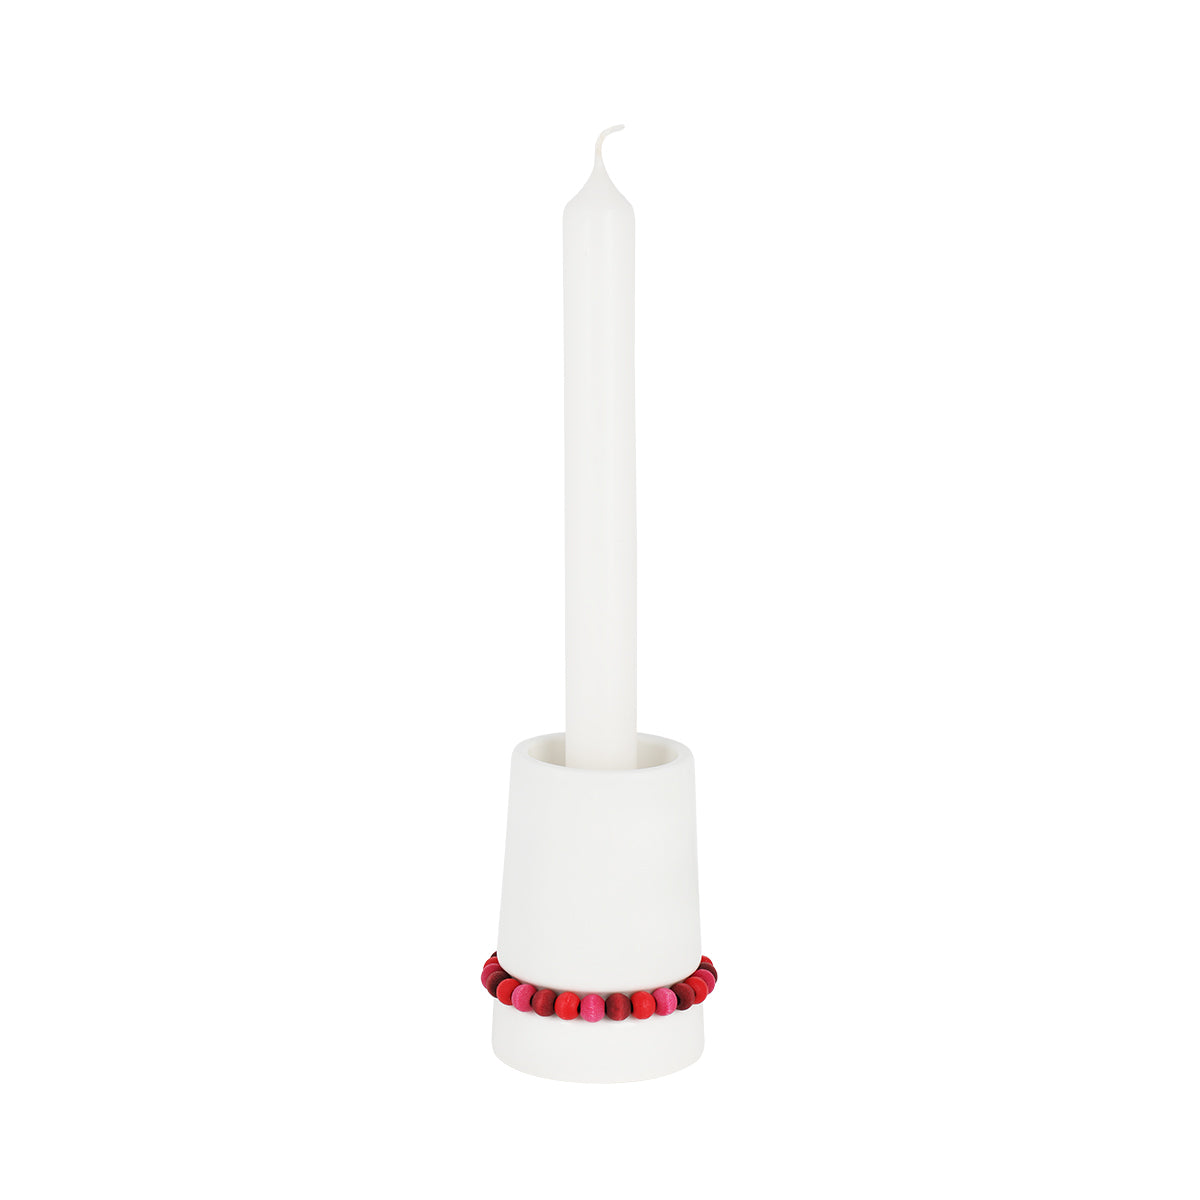 Nuppu candleholder, red, 9,5 cm